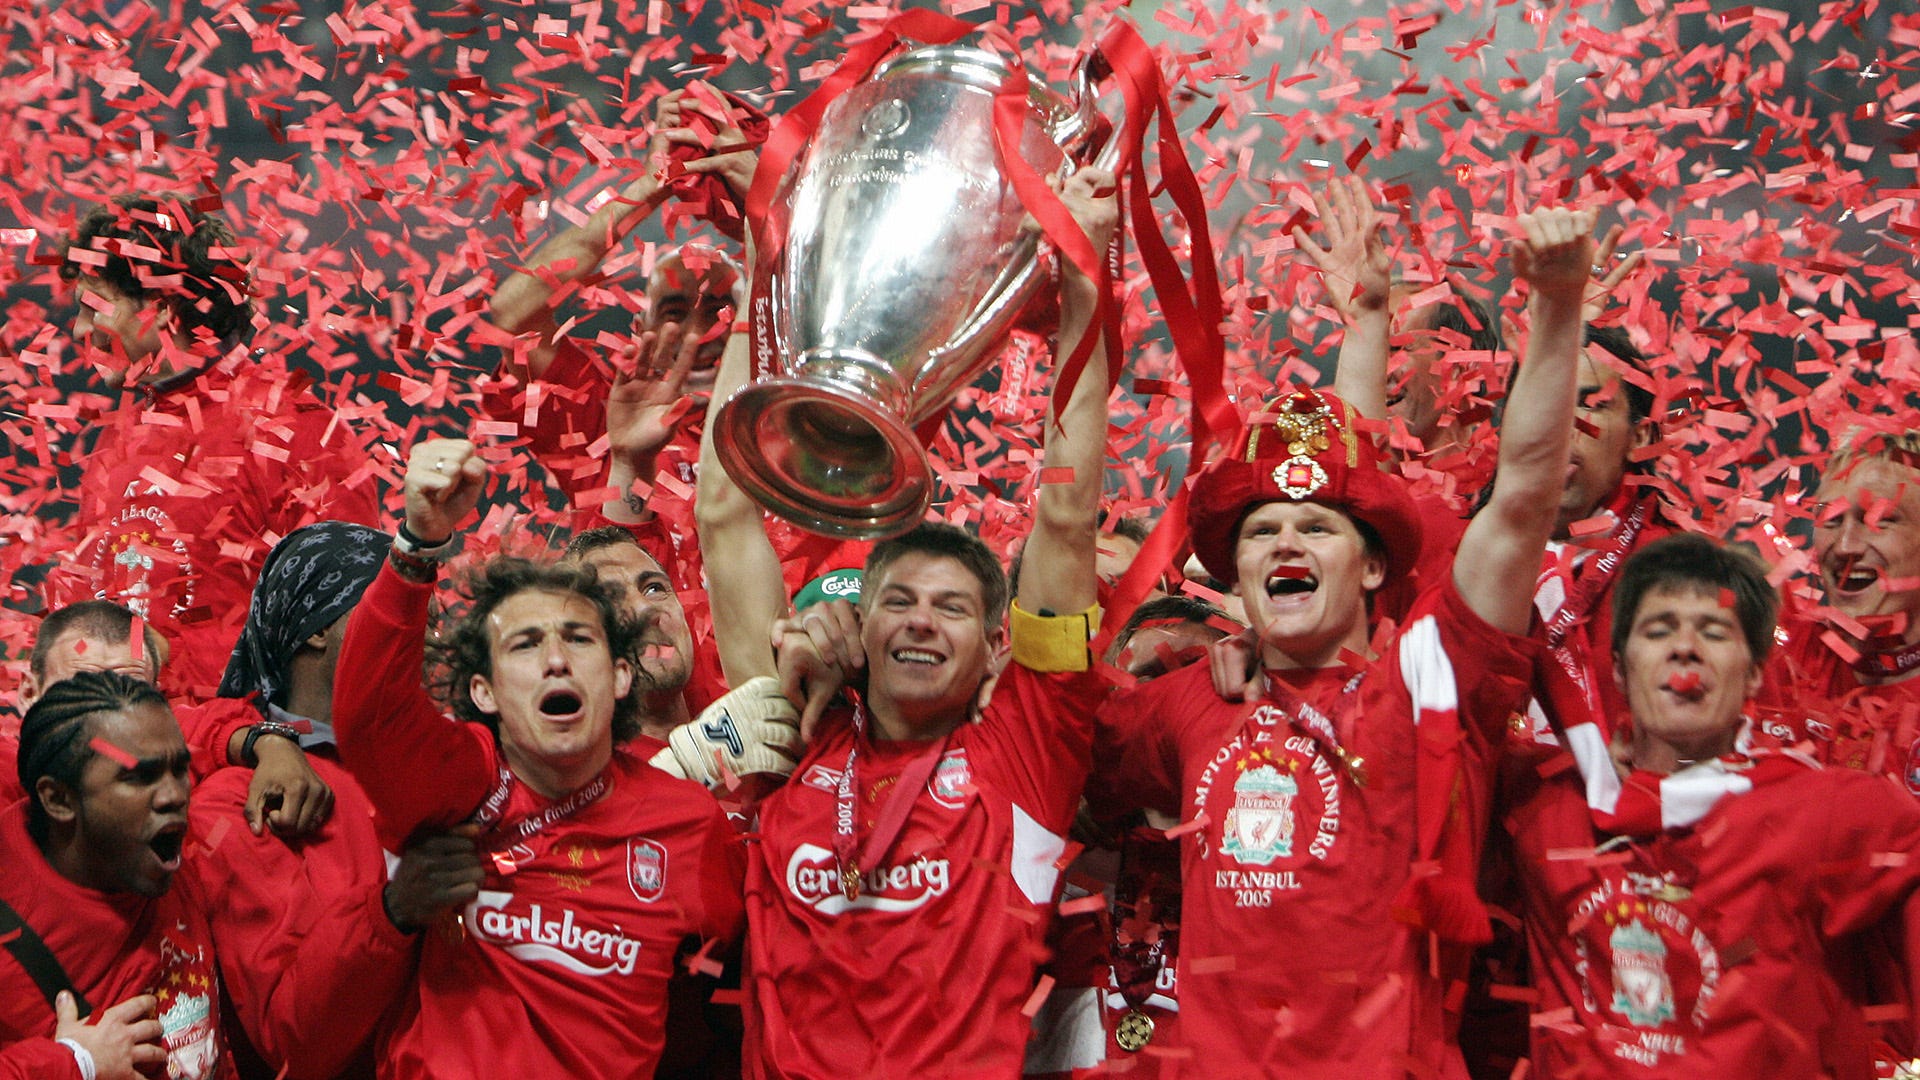 2005 Milan Liverpool Gerrard